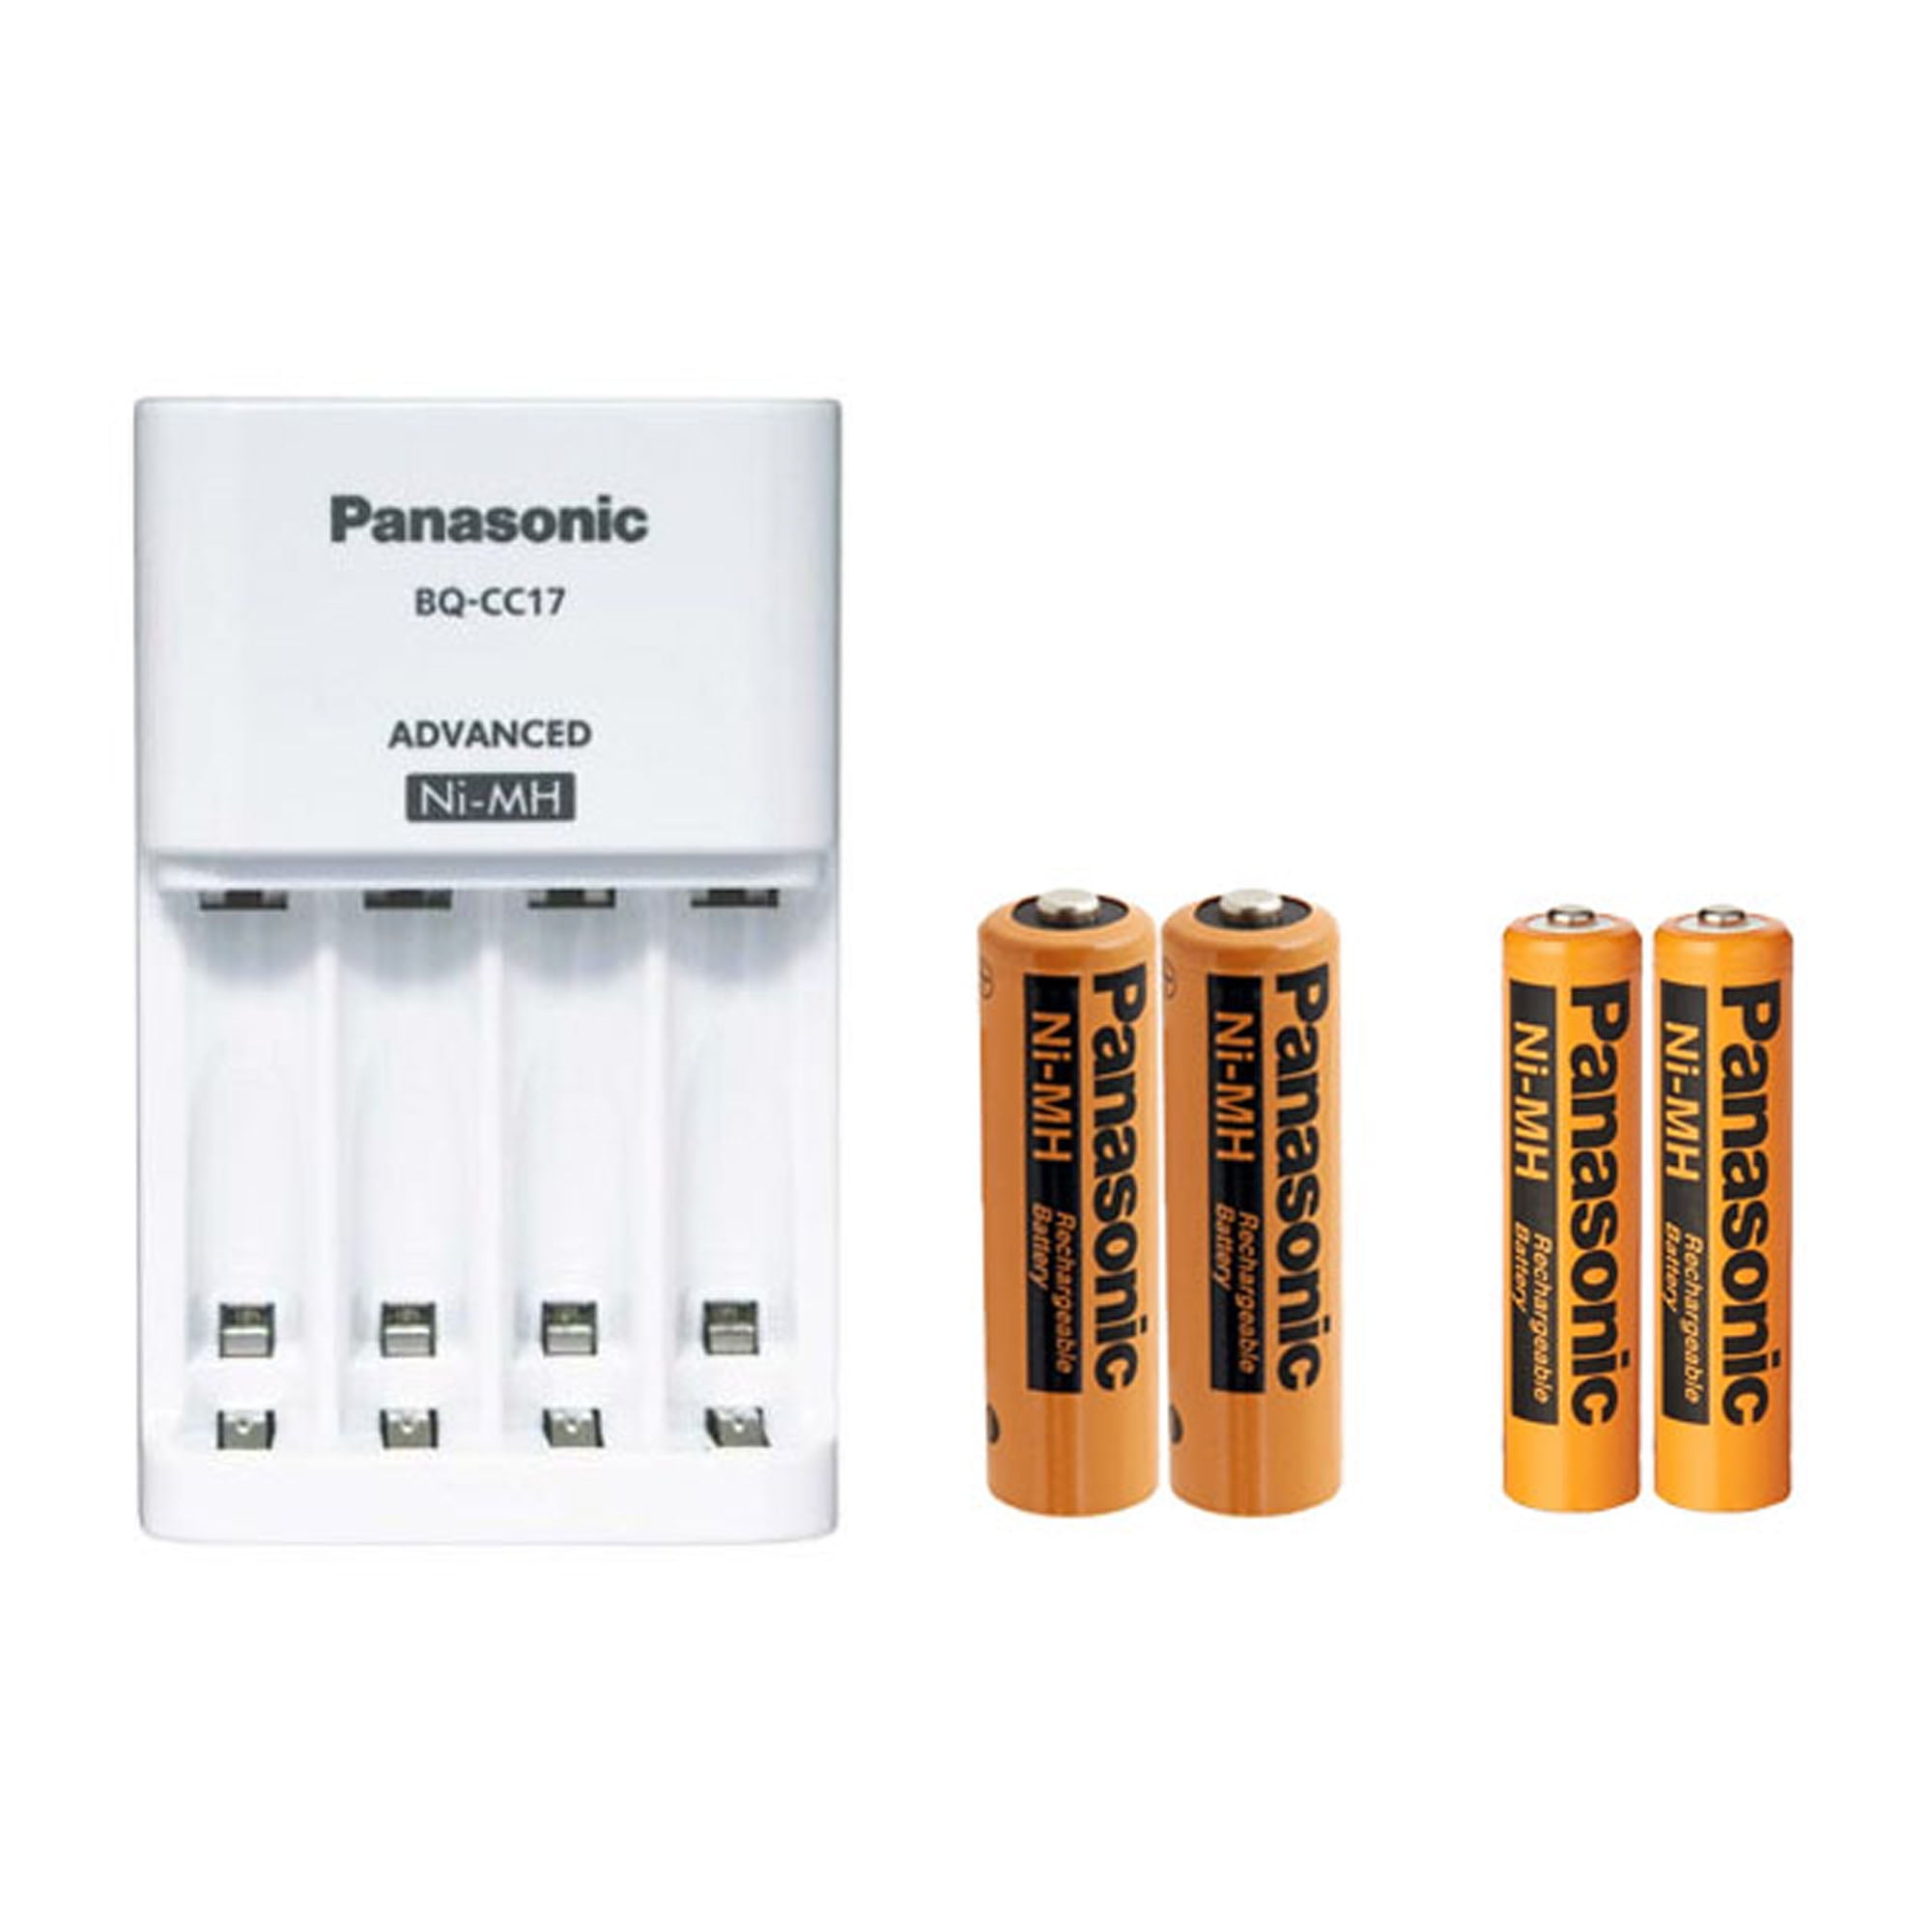 Panasonic Bq Cc17 Smart Battery Charger 2 Aa 2000mah 2 Aaa Free